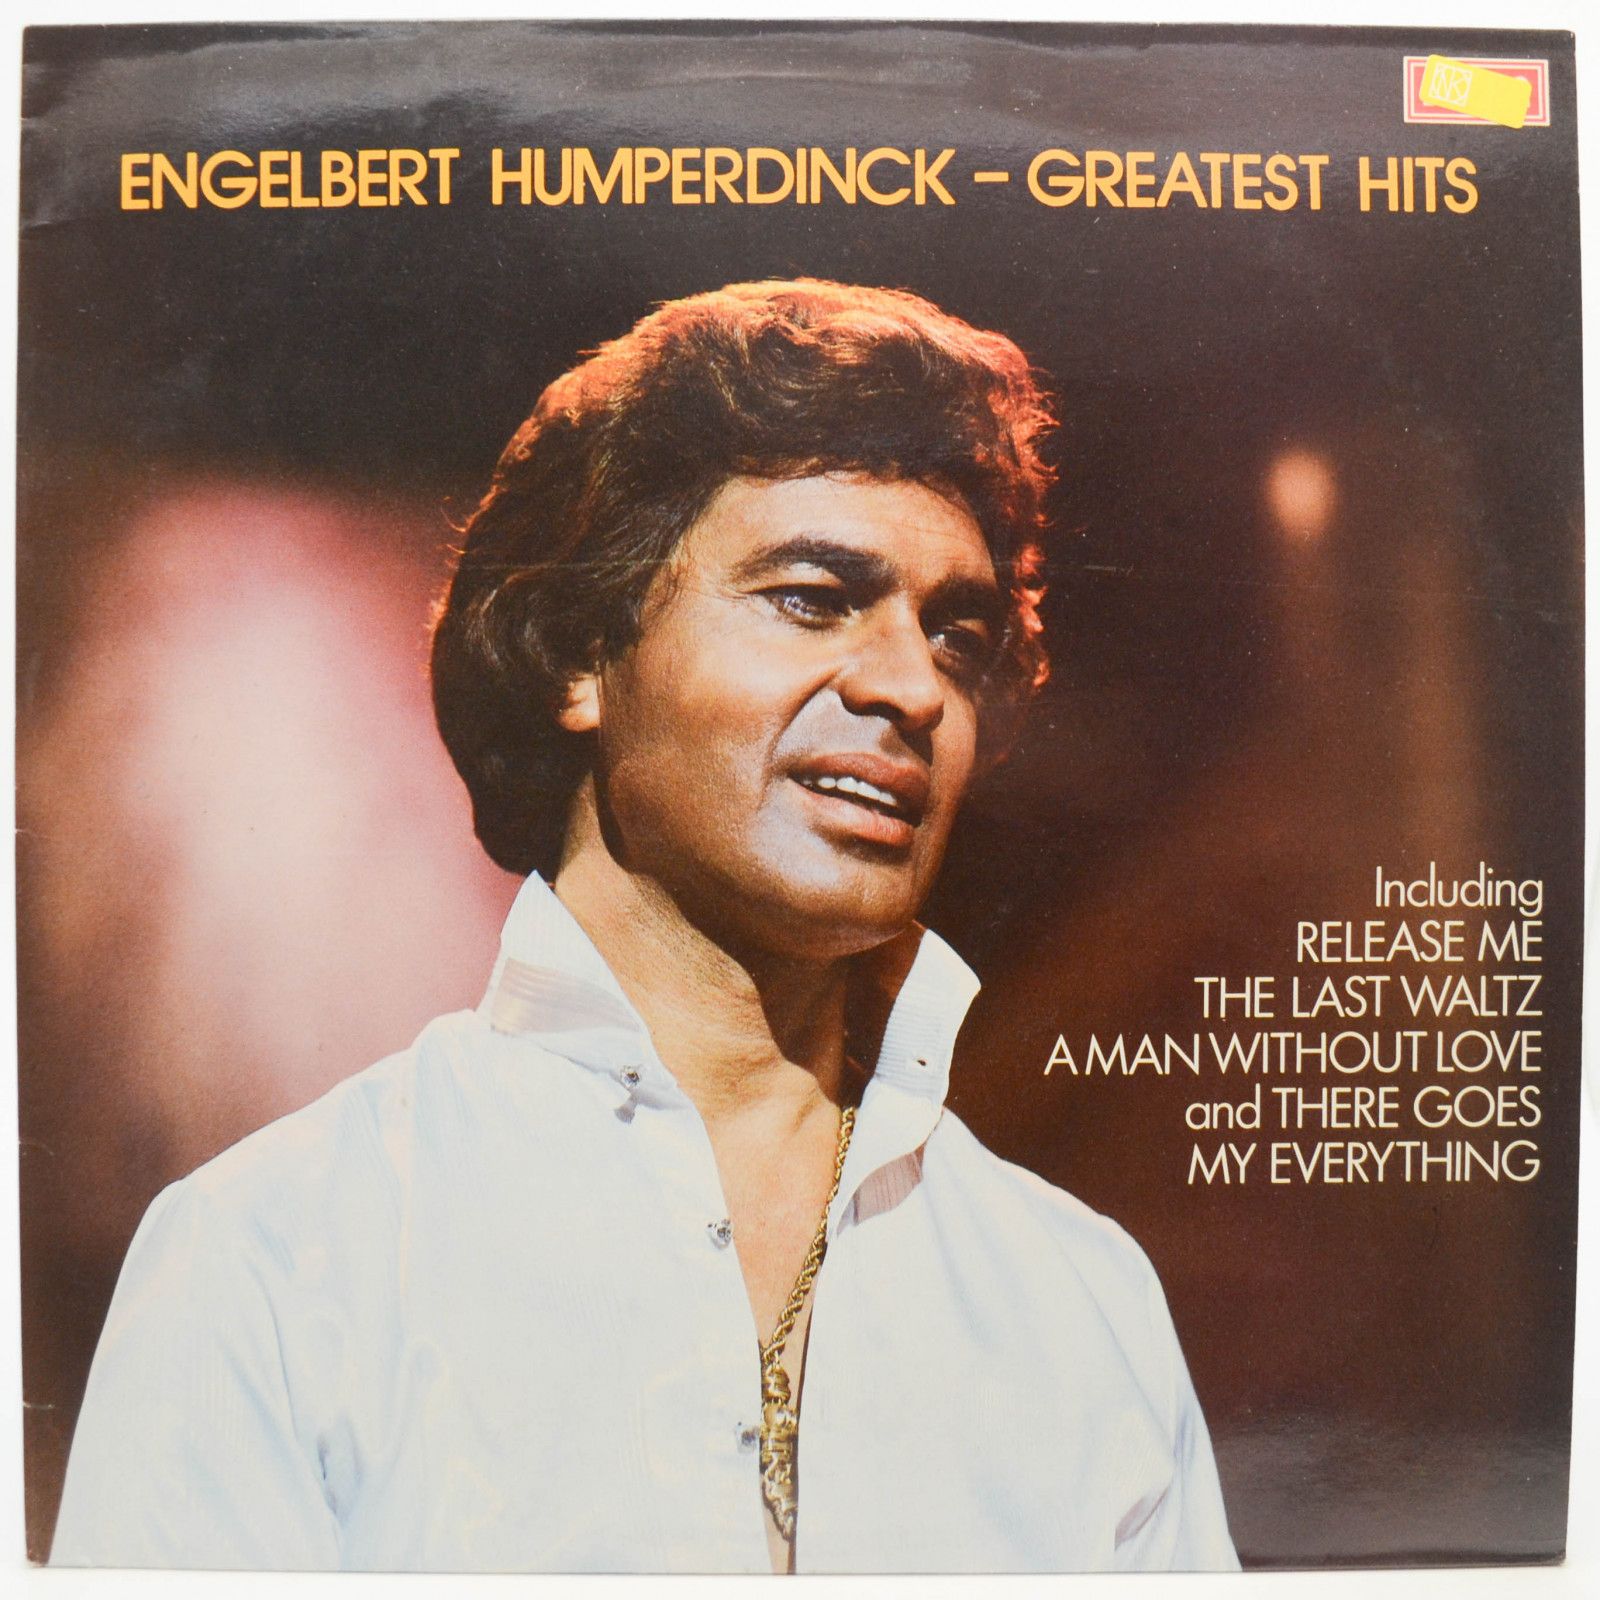 Engelbert Humperdinck — Engelbert Humperdinck's Greatest Hits (UK), 1969